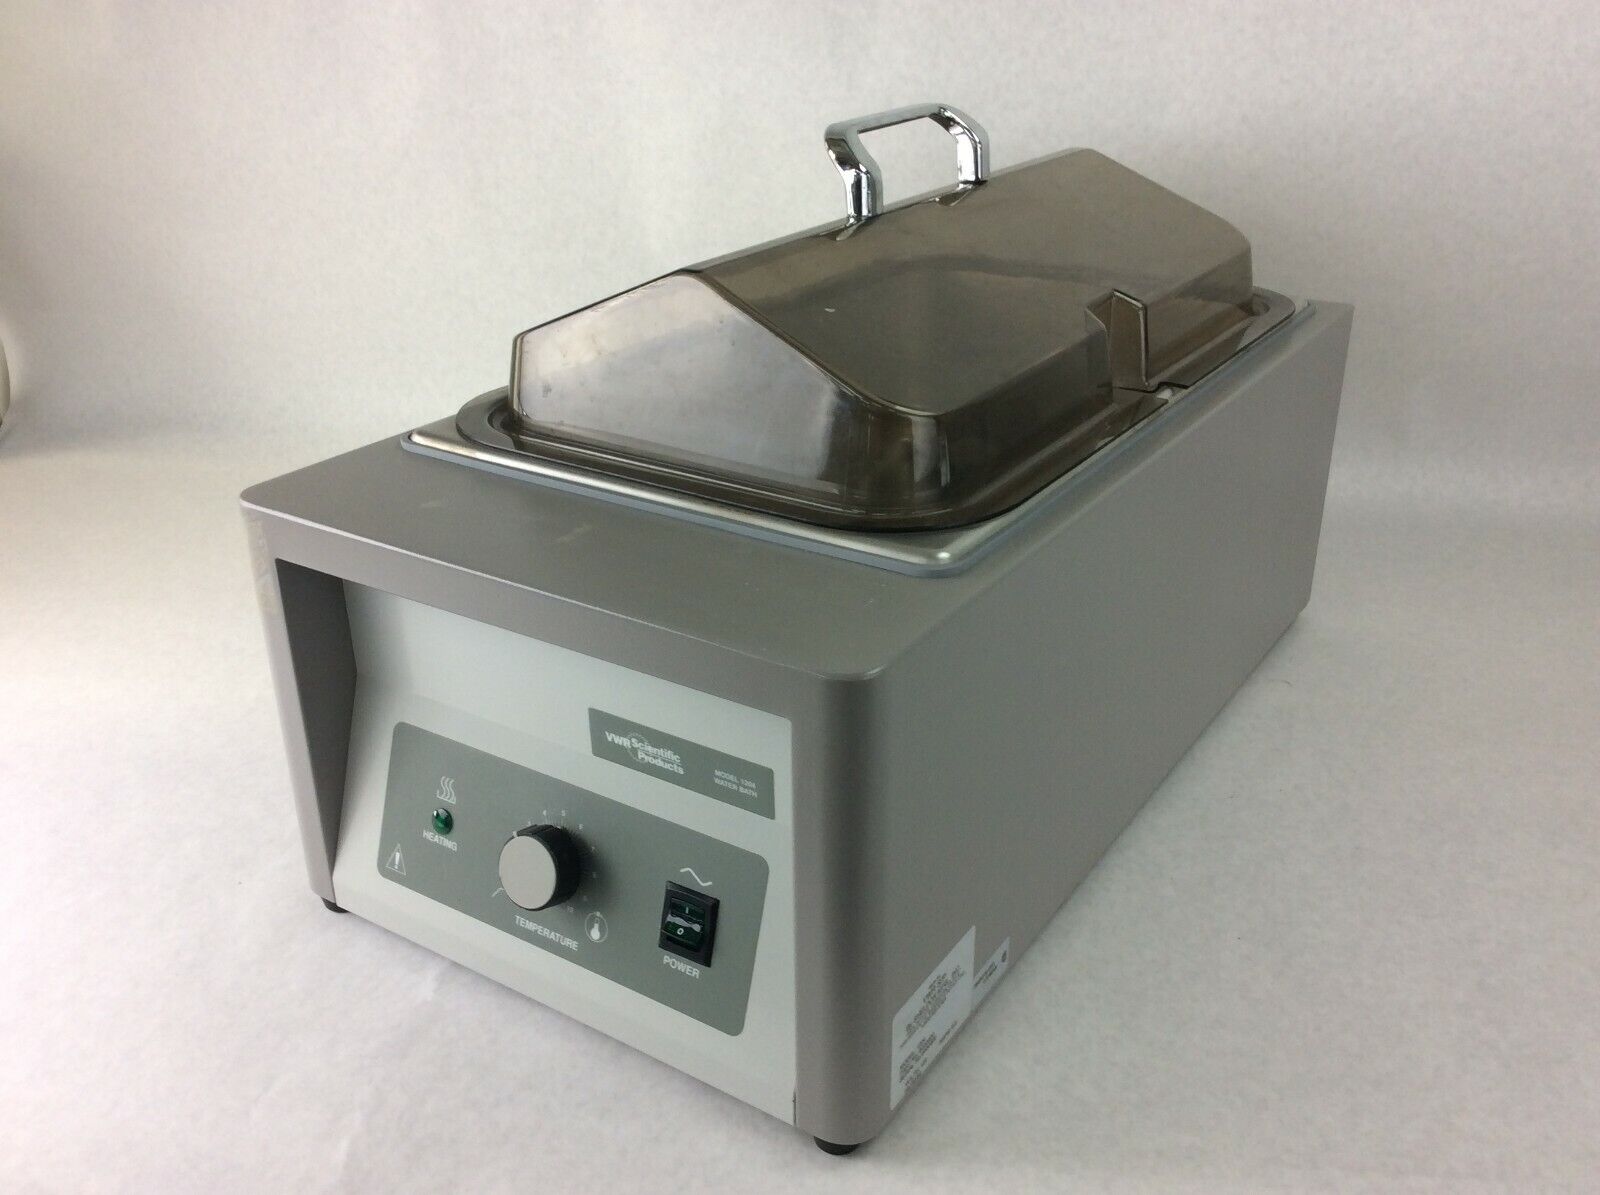 VWR Scientific Products Model 1204 Water Bath